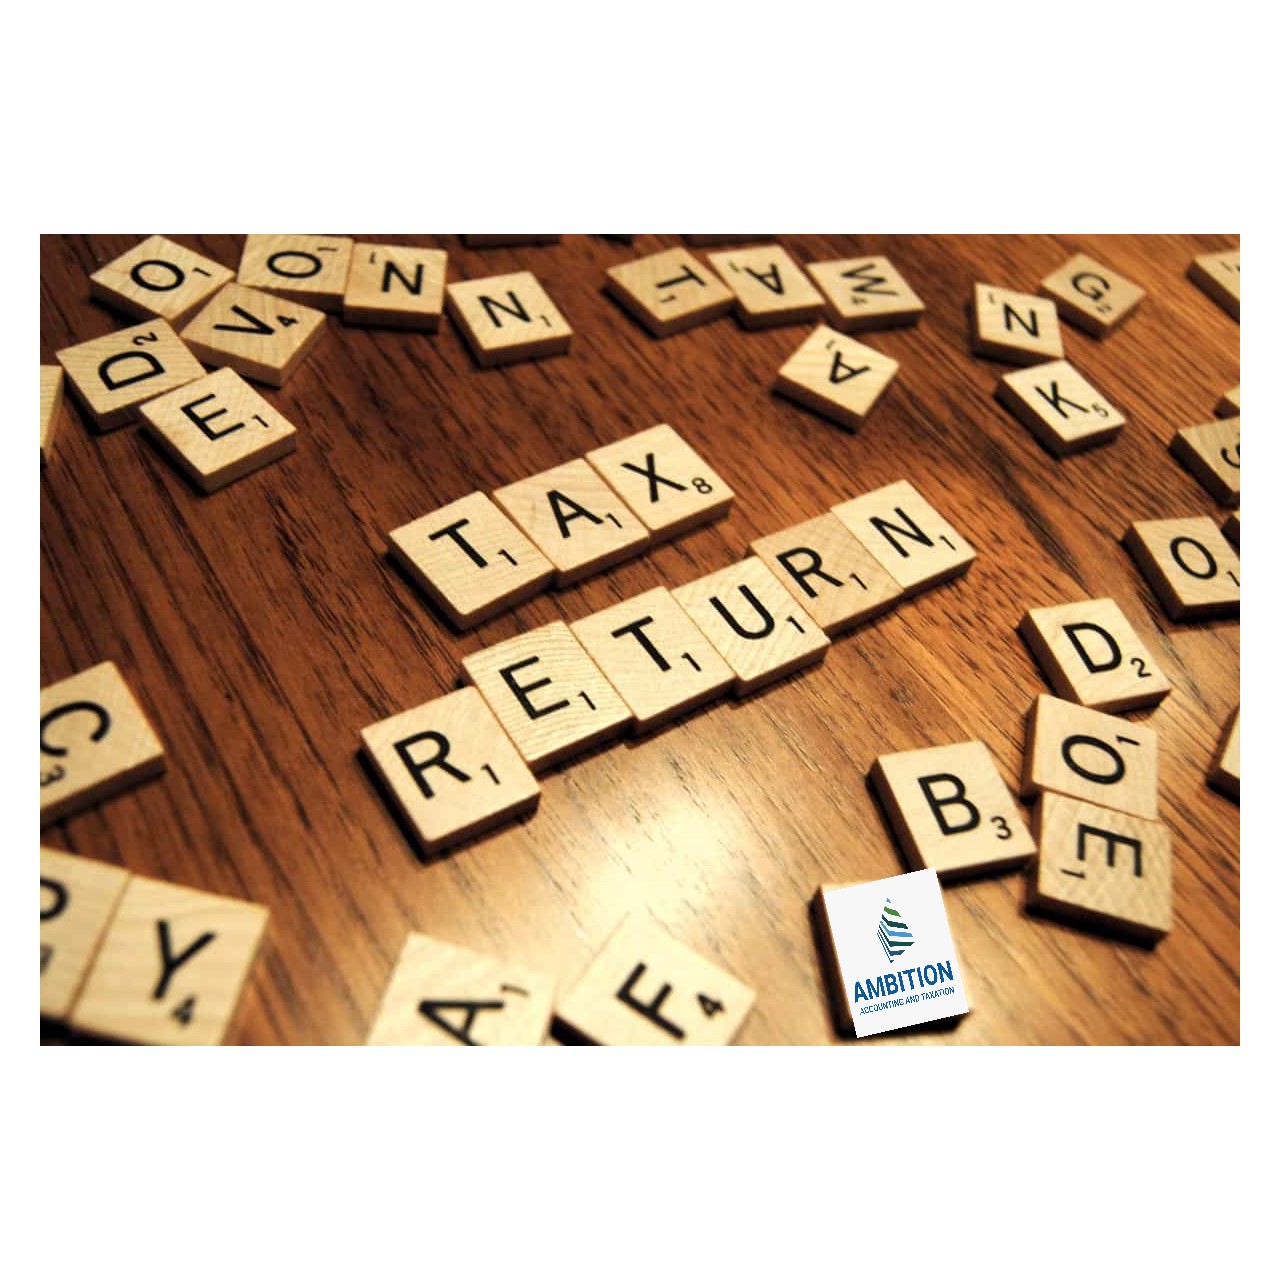 Ltd Company Tax Return Calculator